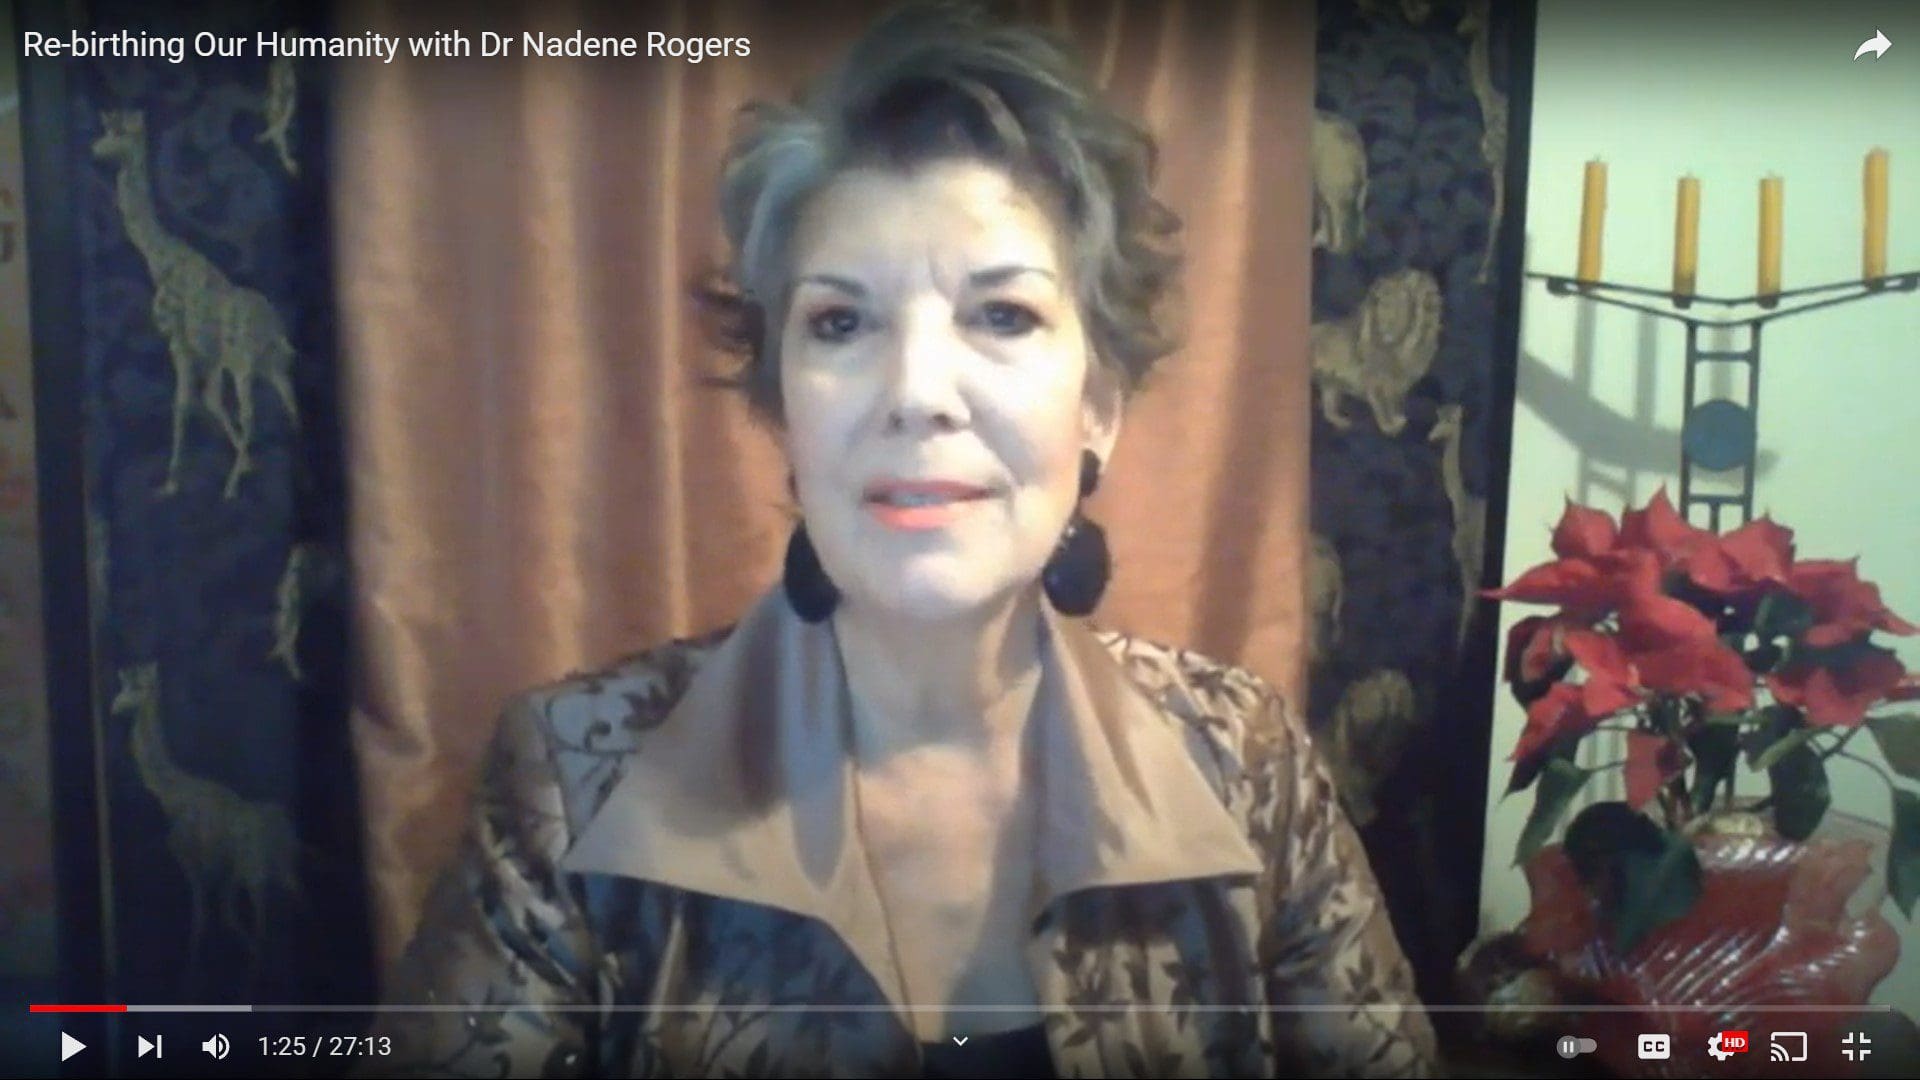 "Rebirthing Our Humanity" – Rev. Dr. Nadene Rogers